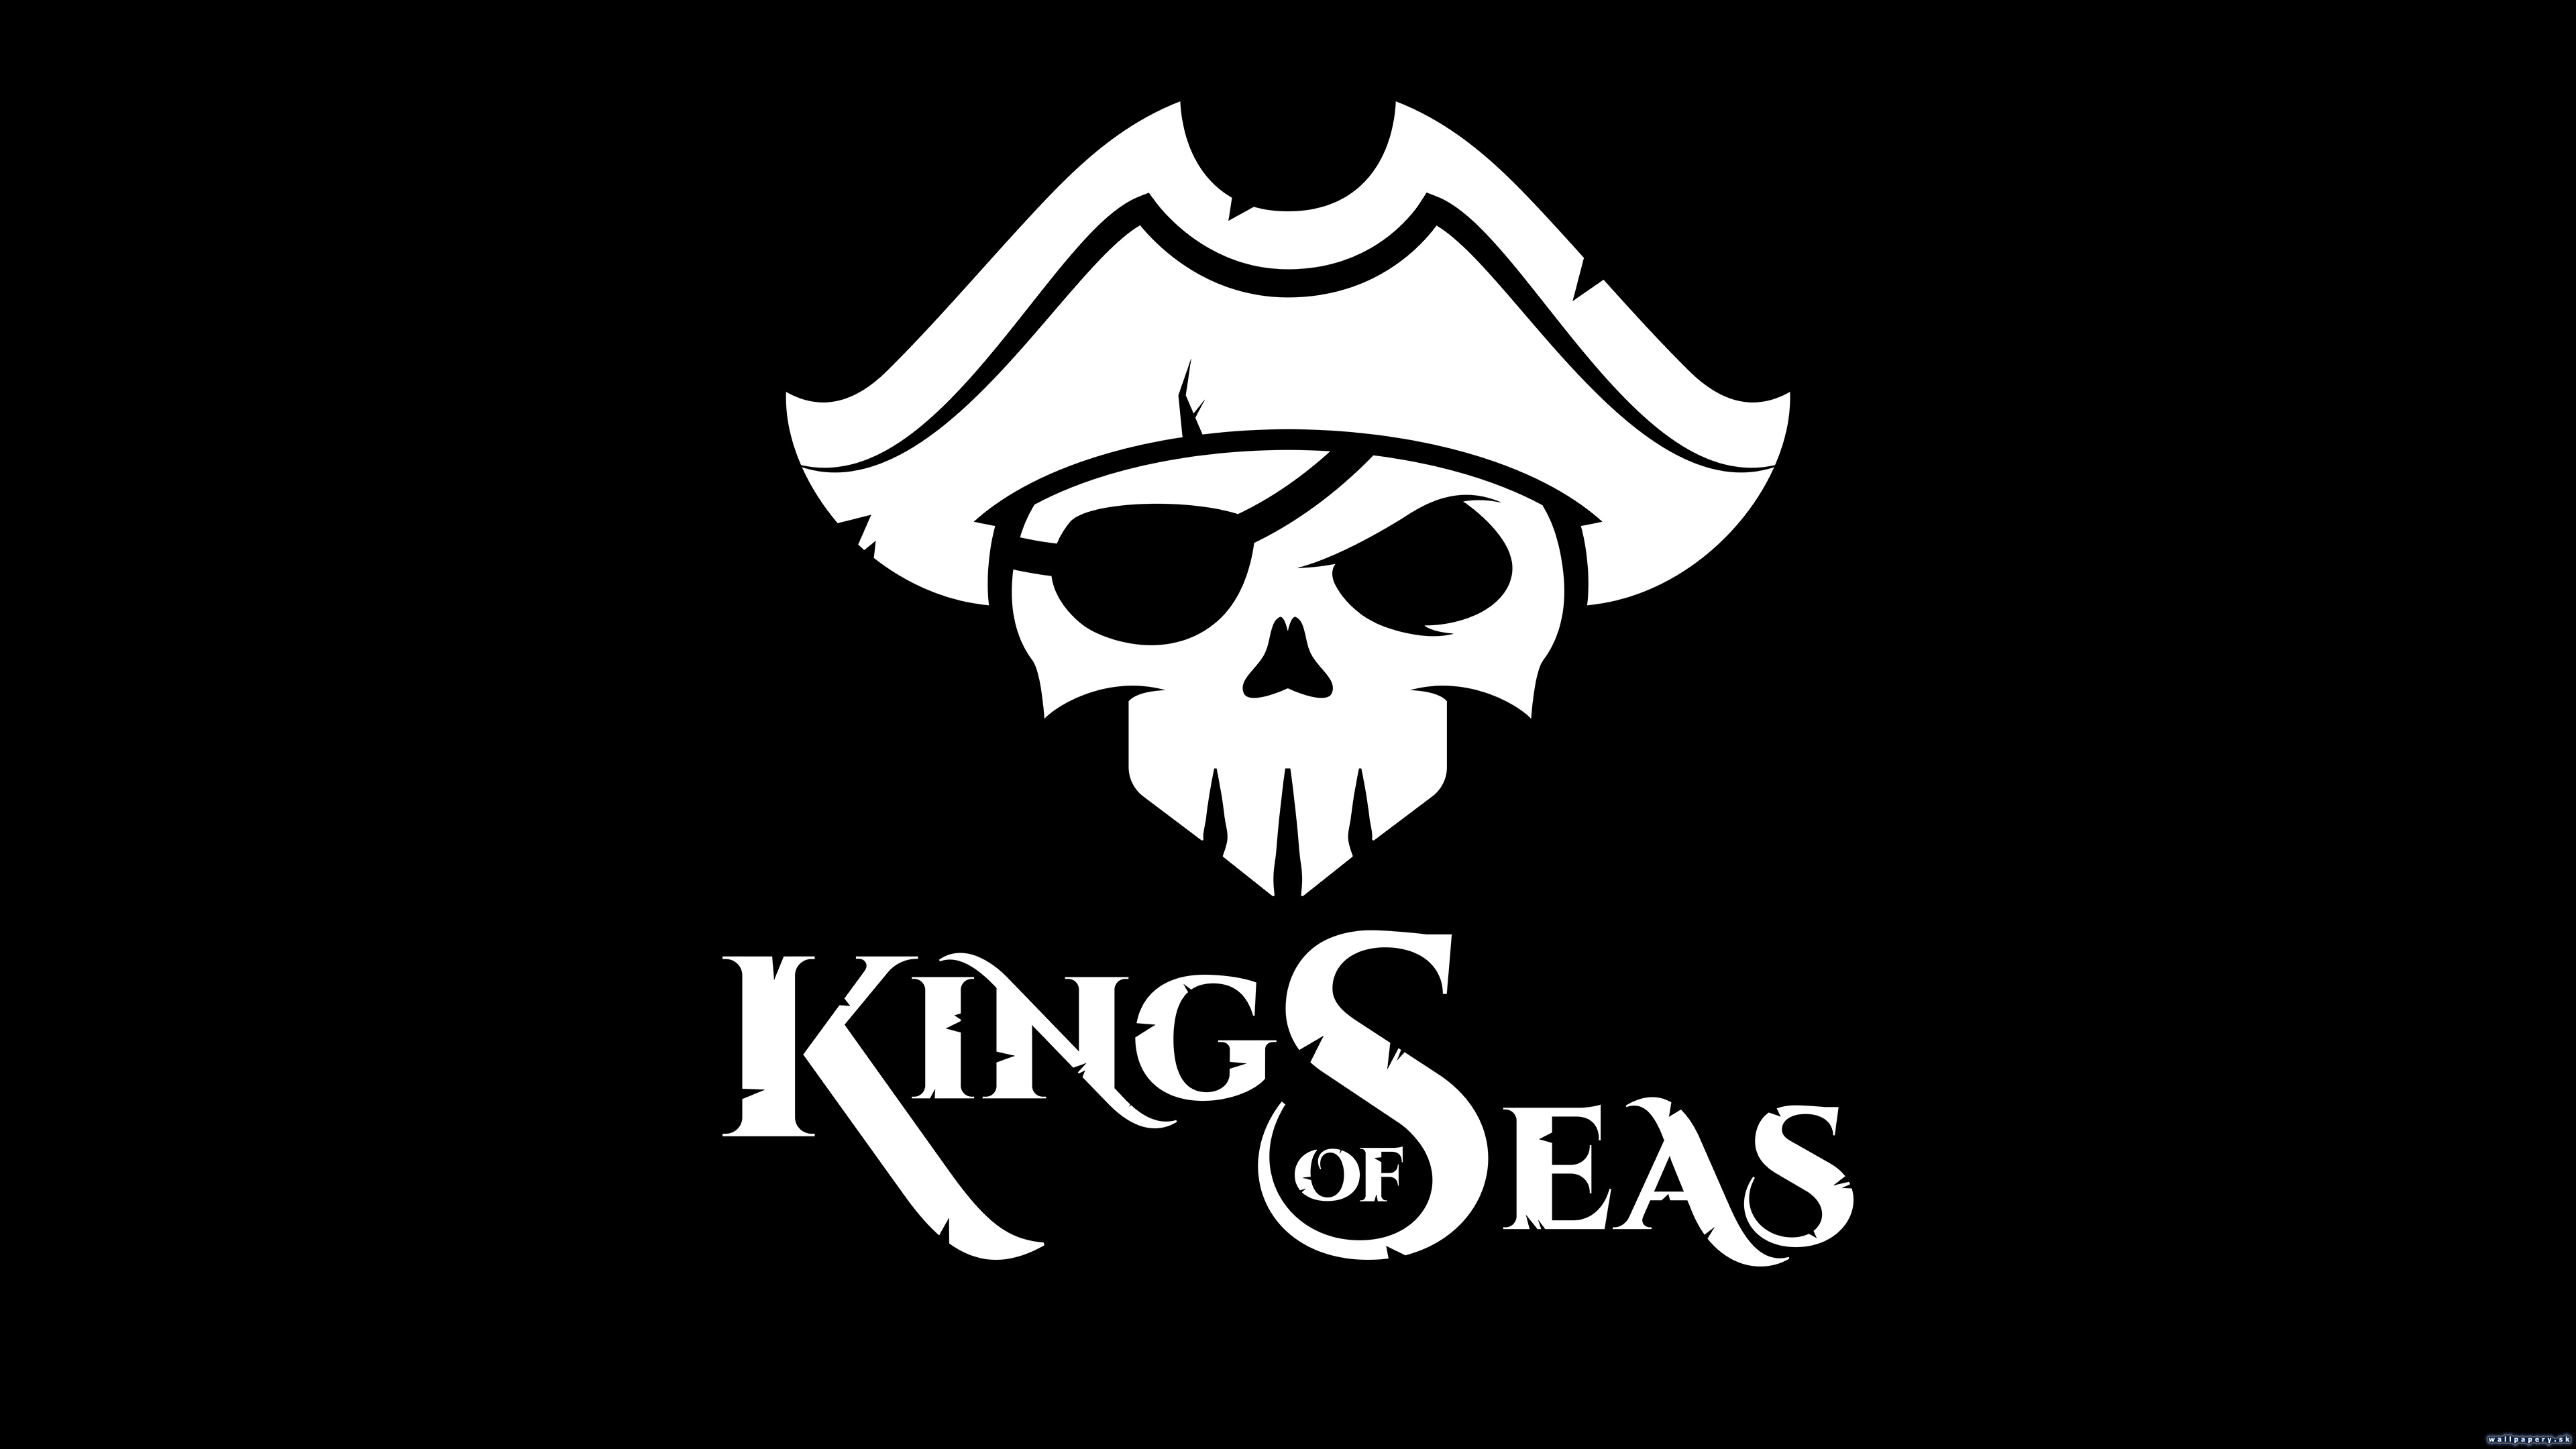 King of Seas - wallpaper 2